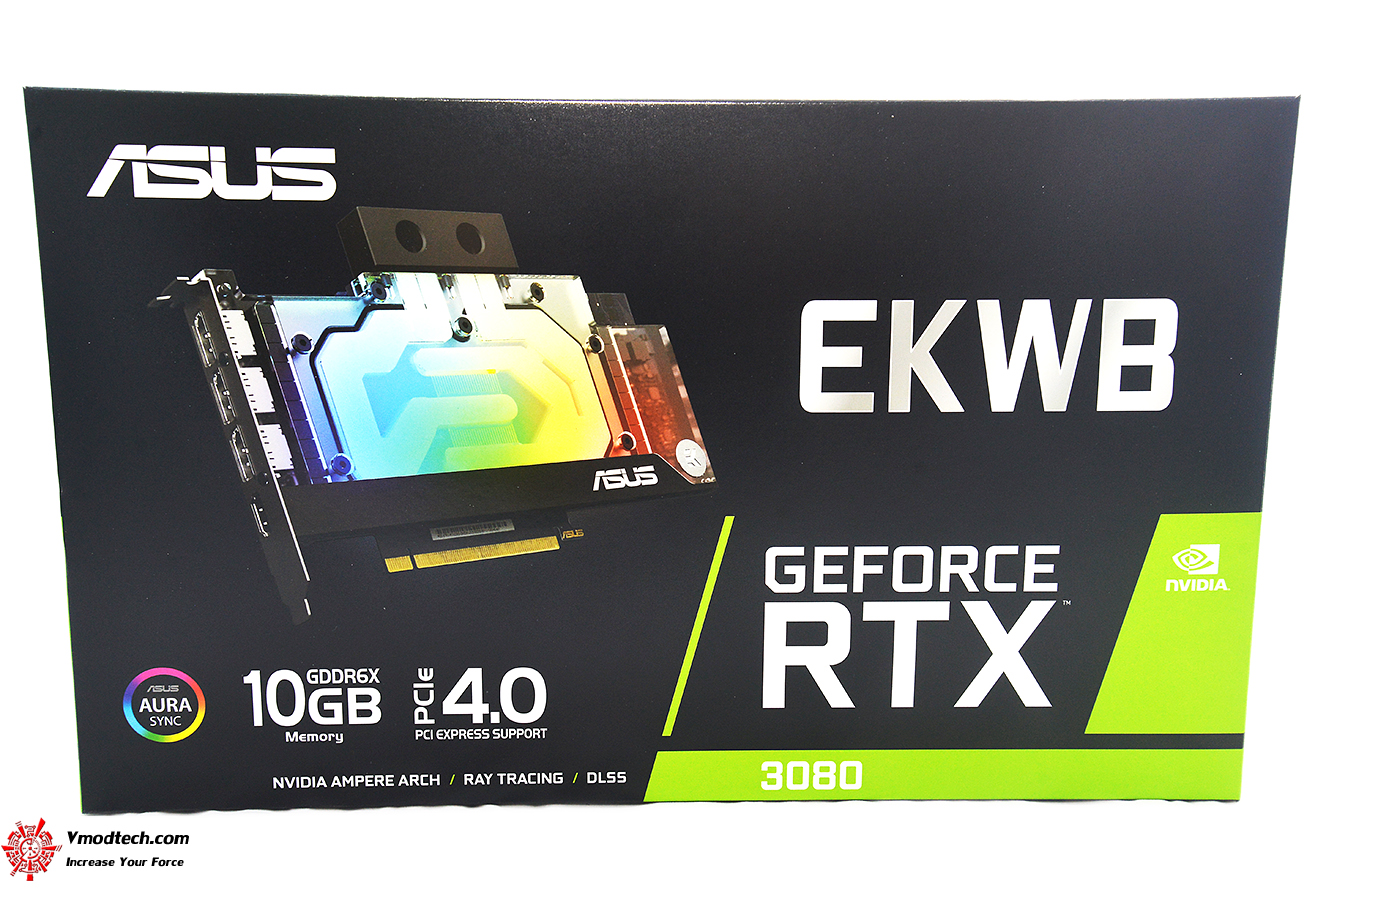 dsc 7752 ASUS GeForce RTX 3080 10GB EKWB Review